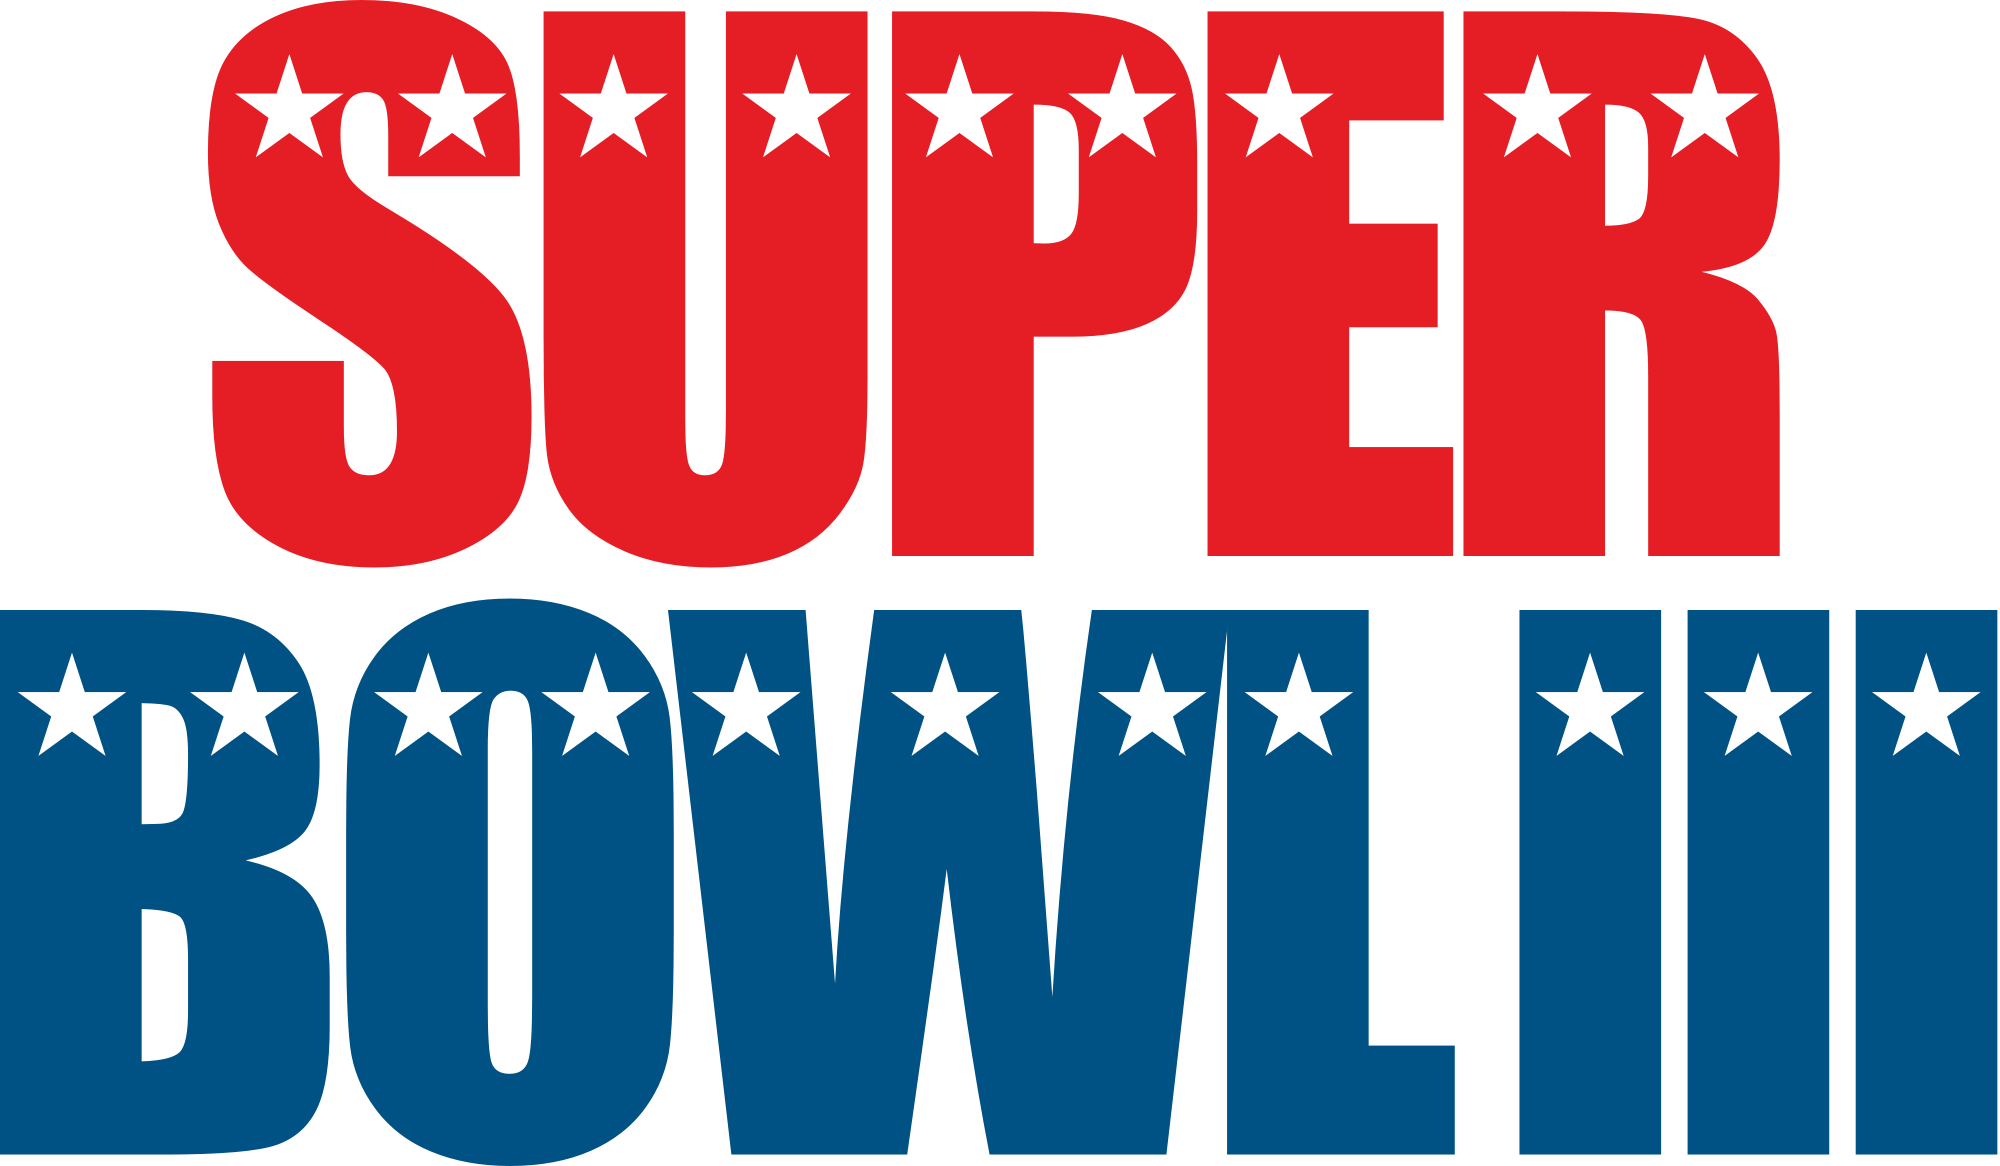 III Logo - File:Super Bowl III logo.svg - Wikimedia Commons